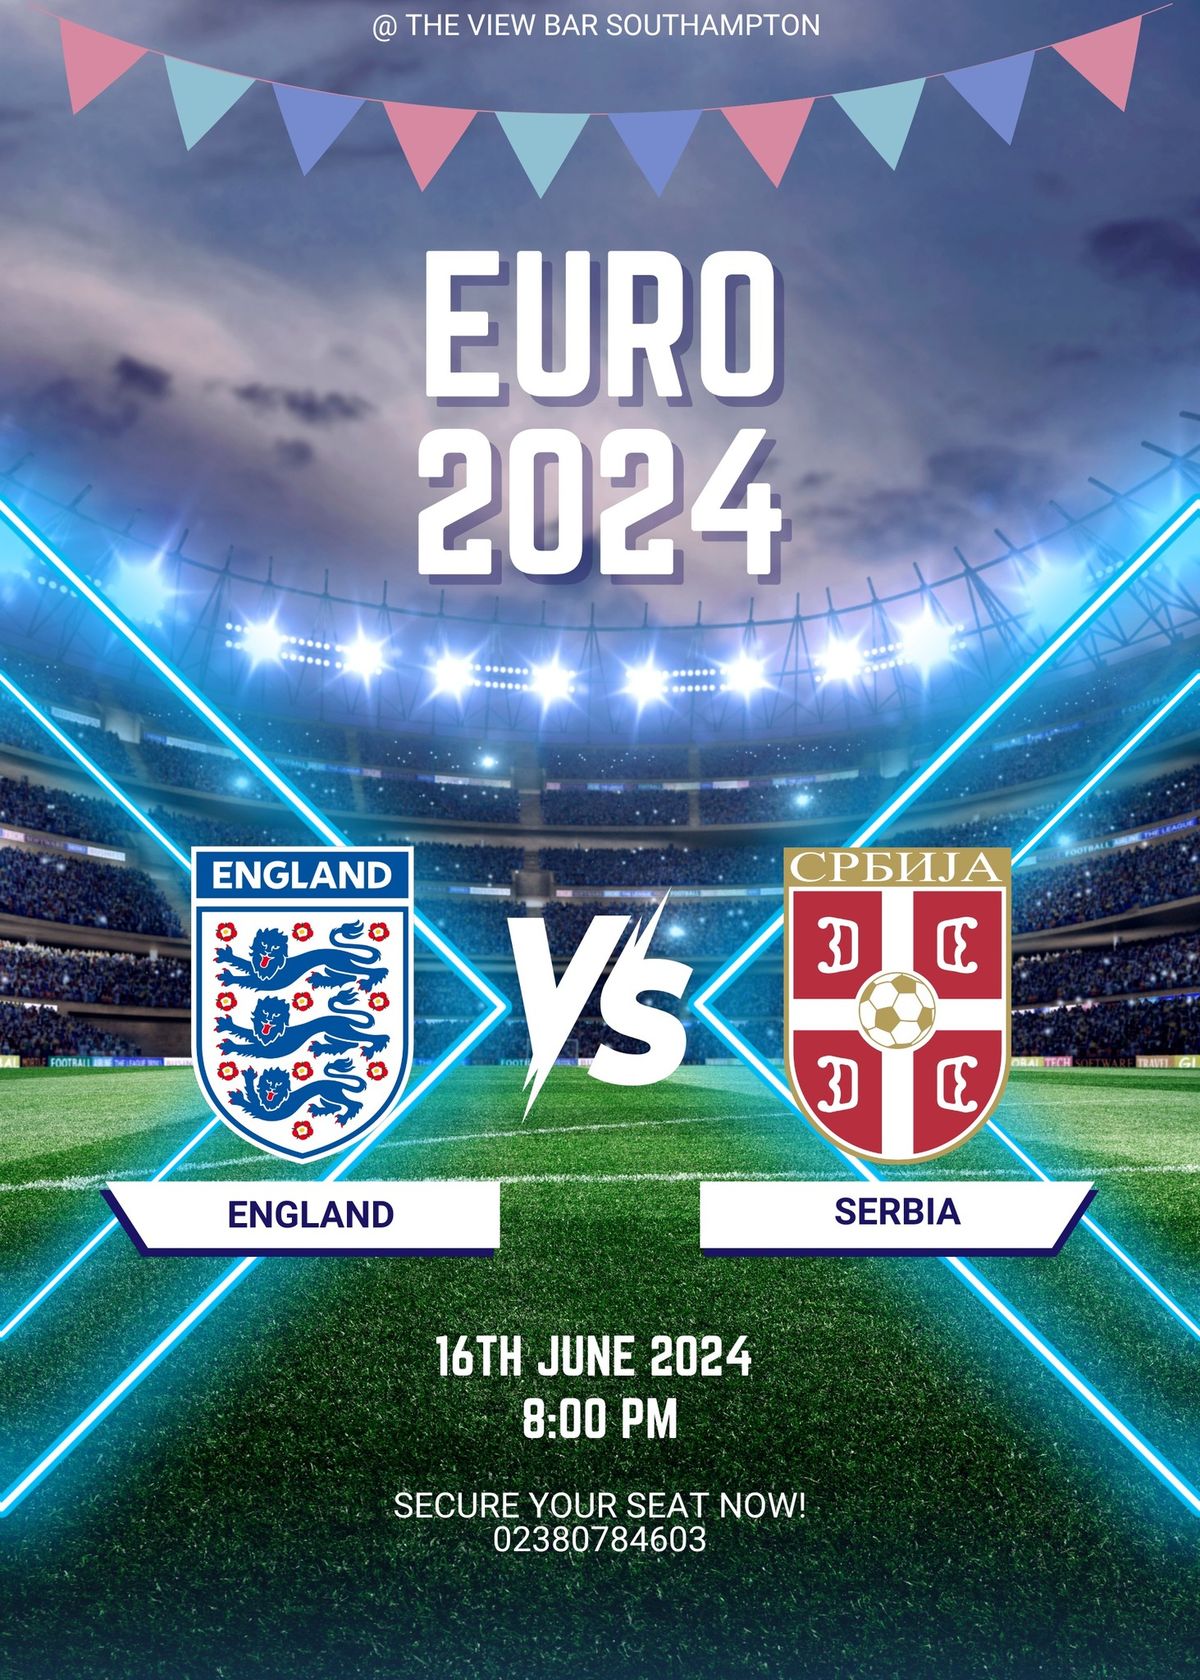 EURO 2024 - ENGLAND VS SERBIA